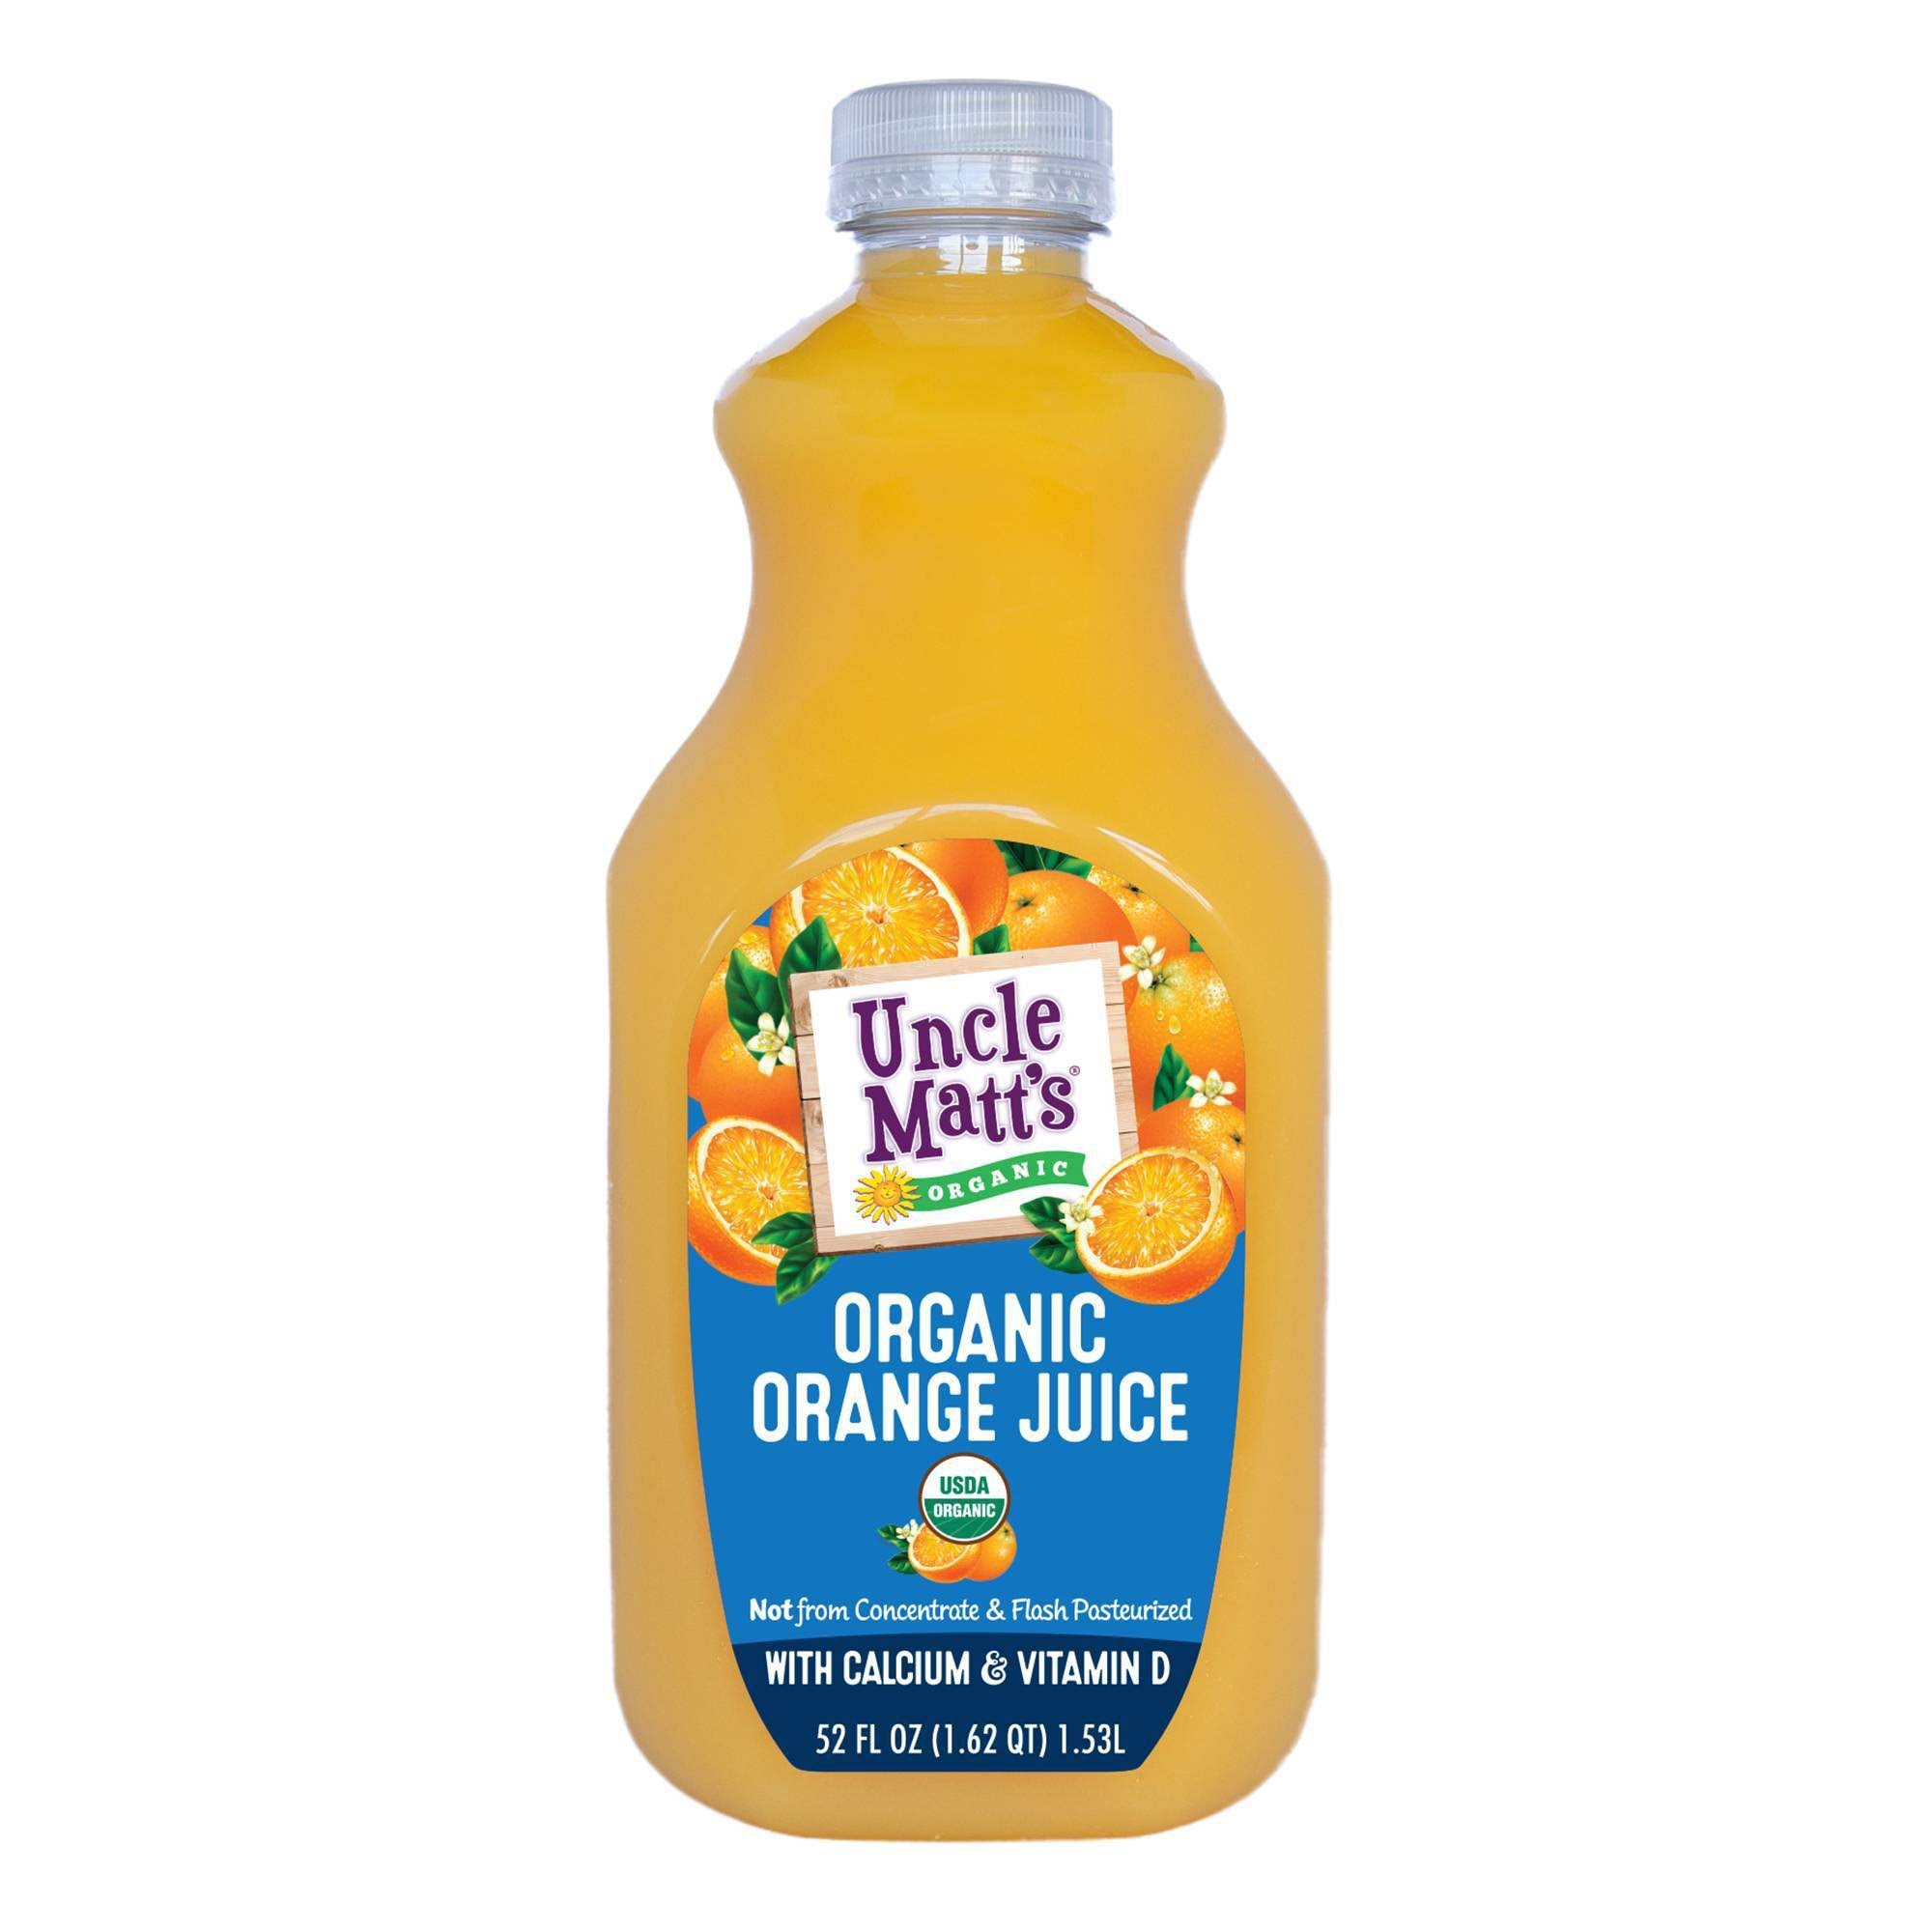 Uncle Matts Orange Juice, Organic - 52 fl oz